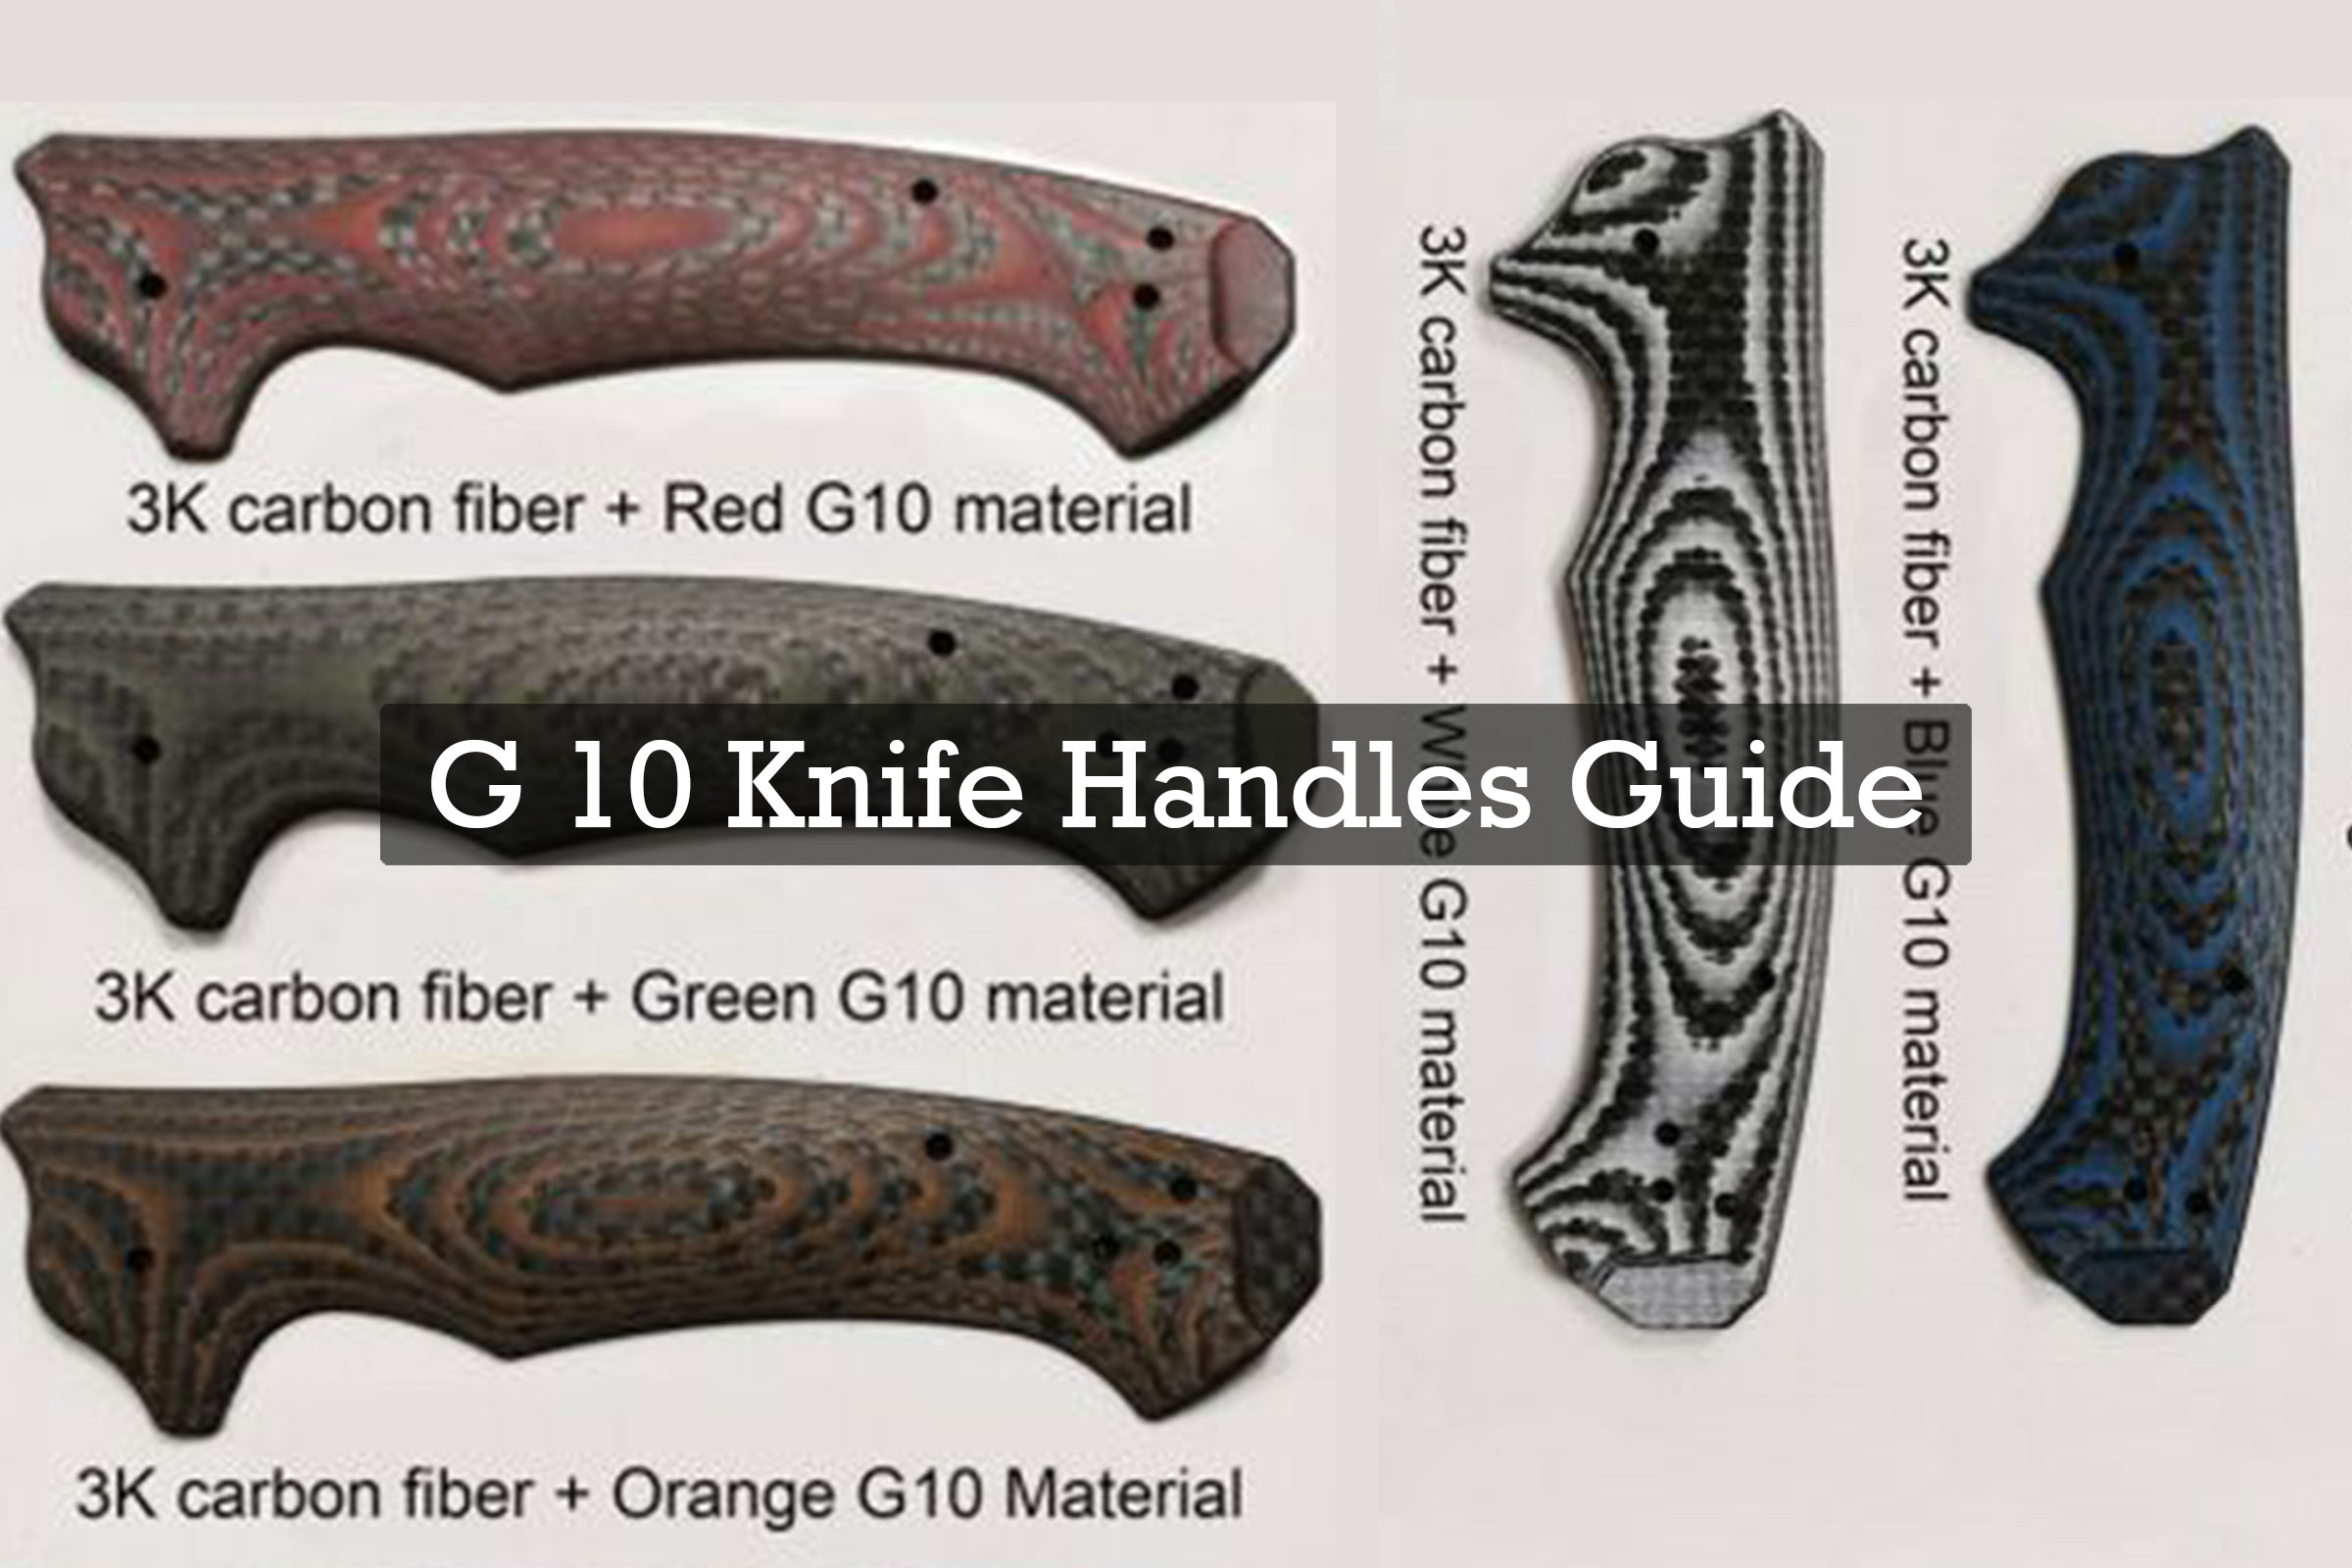 G10 Knife handles Guide